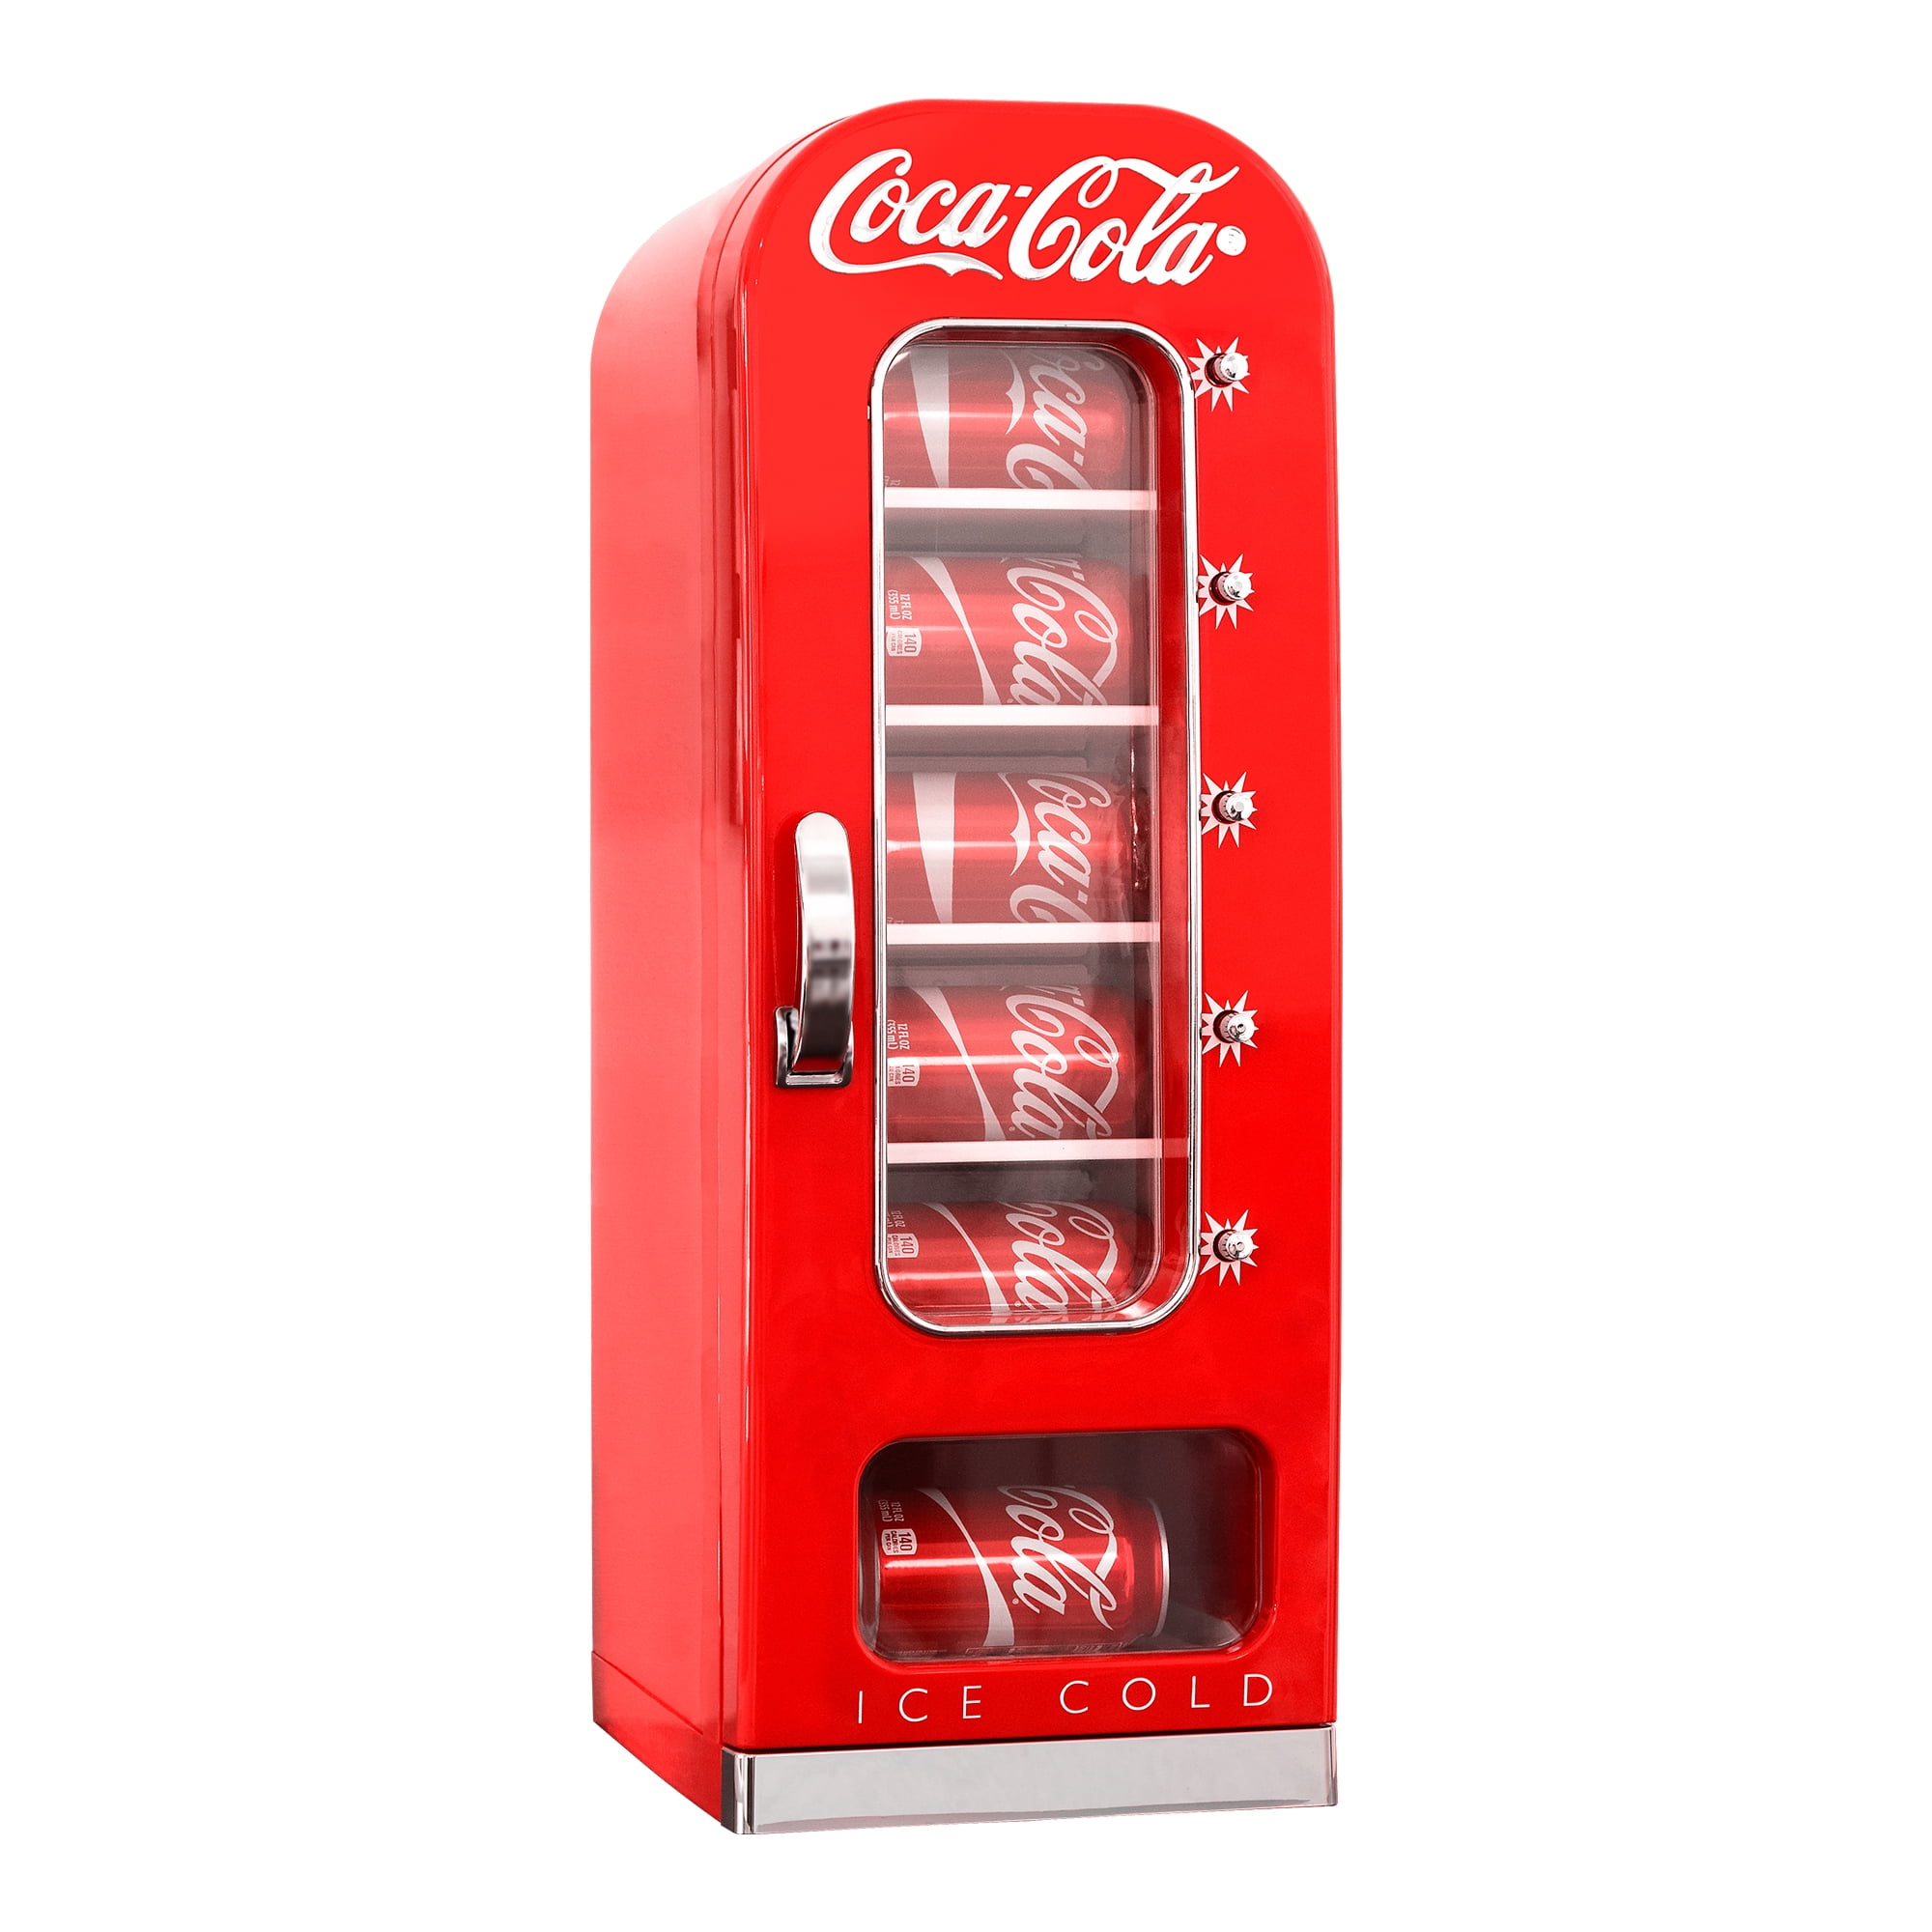 Coca-Cola 3.5 Cu.Ft. Refrigerator & Chest Freezer, Red — Nostalgia Products